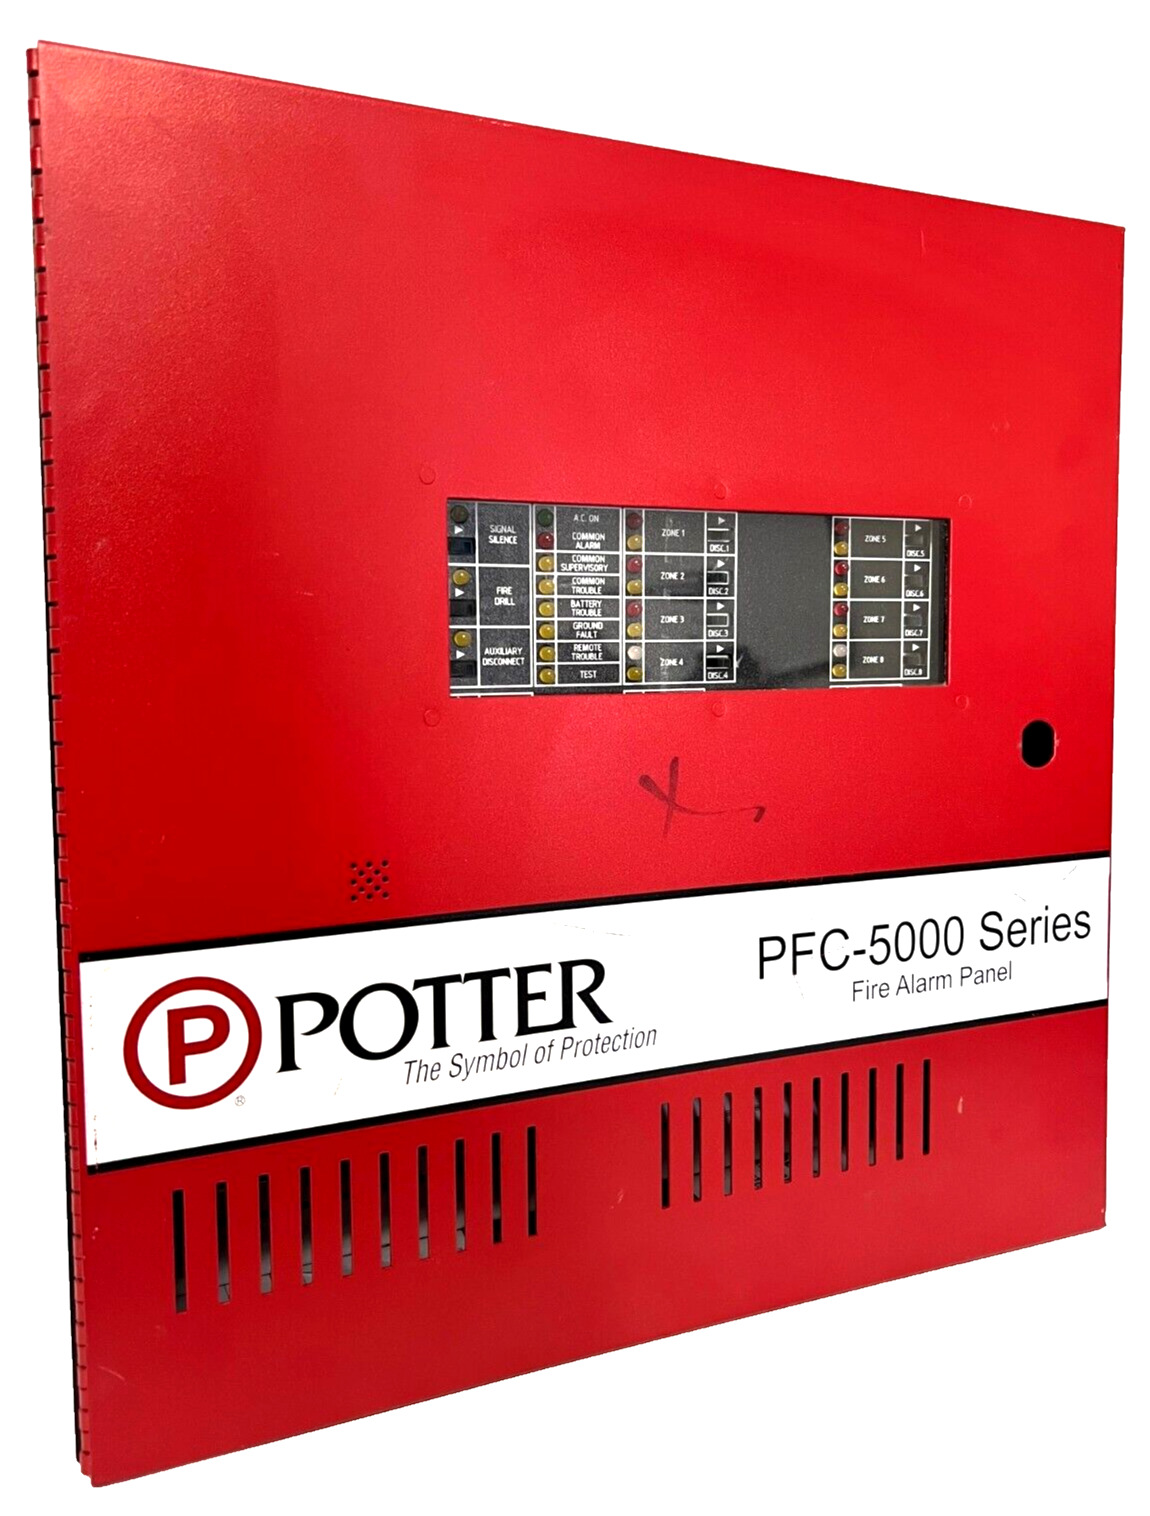 Potter PFC-5008 8-Zone Fire Alarm Panel w/ UDACT 9100, ZA42 Expansion Modules